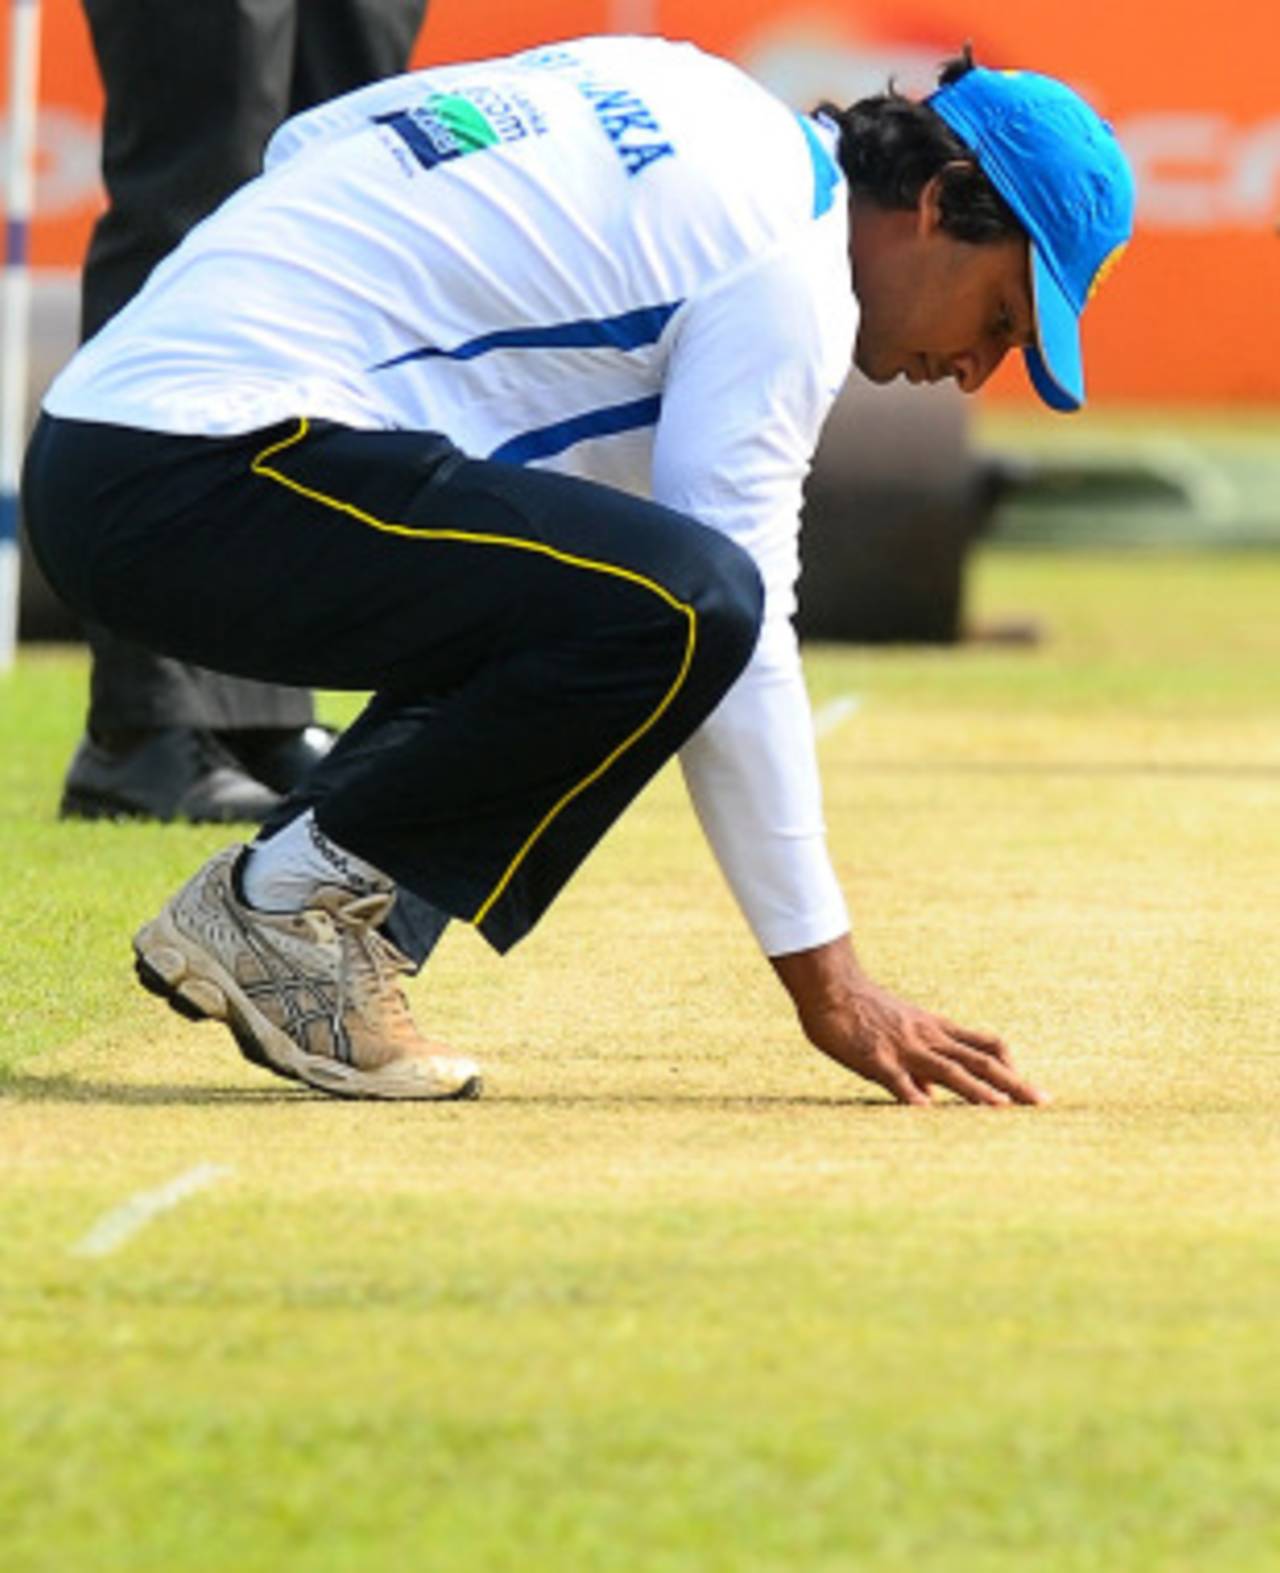 Kumar Sangakkara checks the pitch, Colombo, August 2, 2010